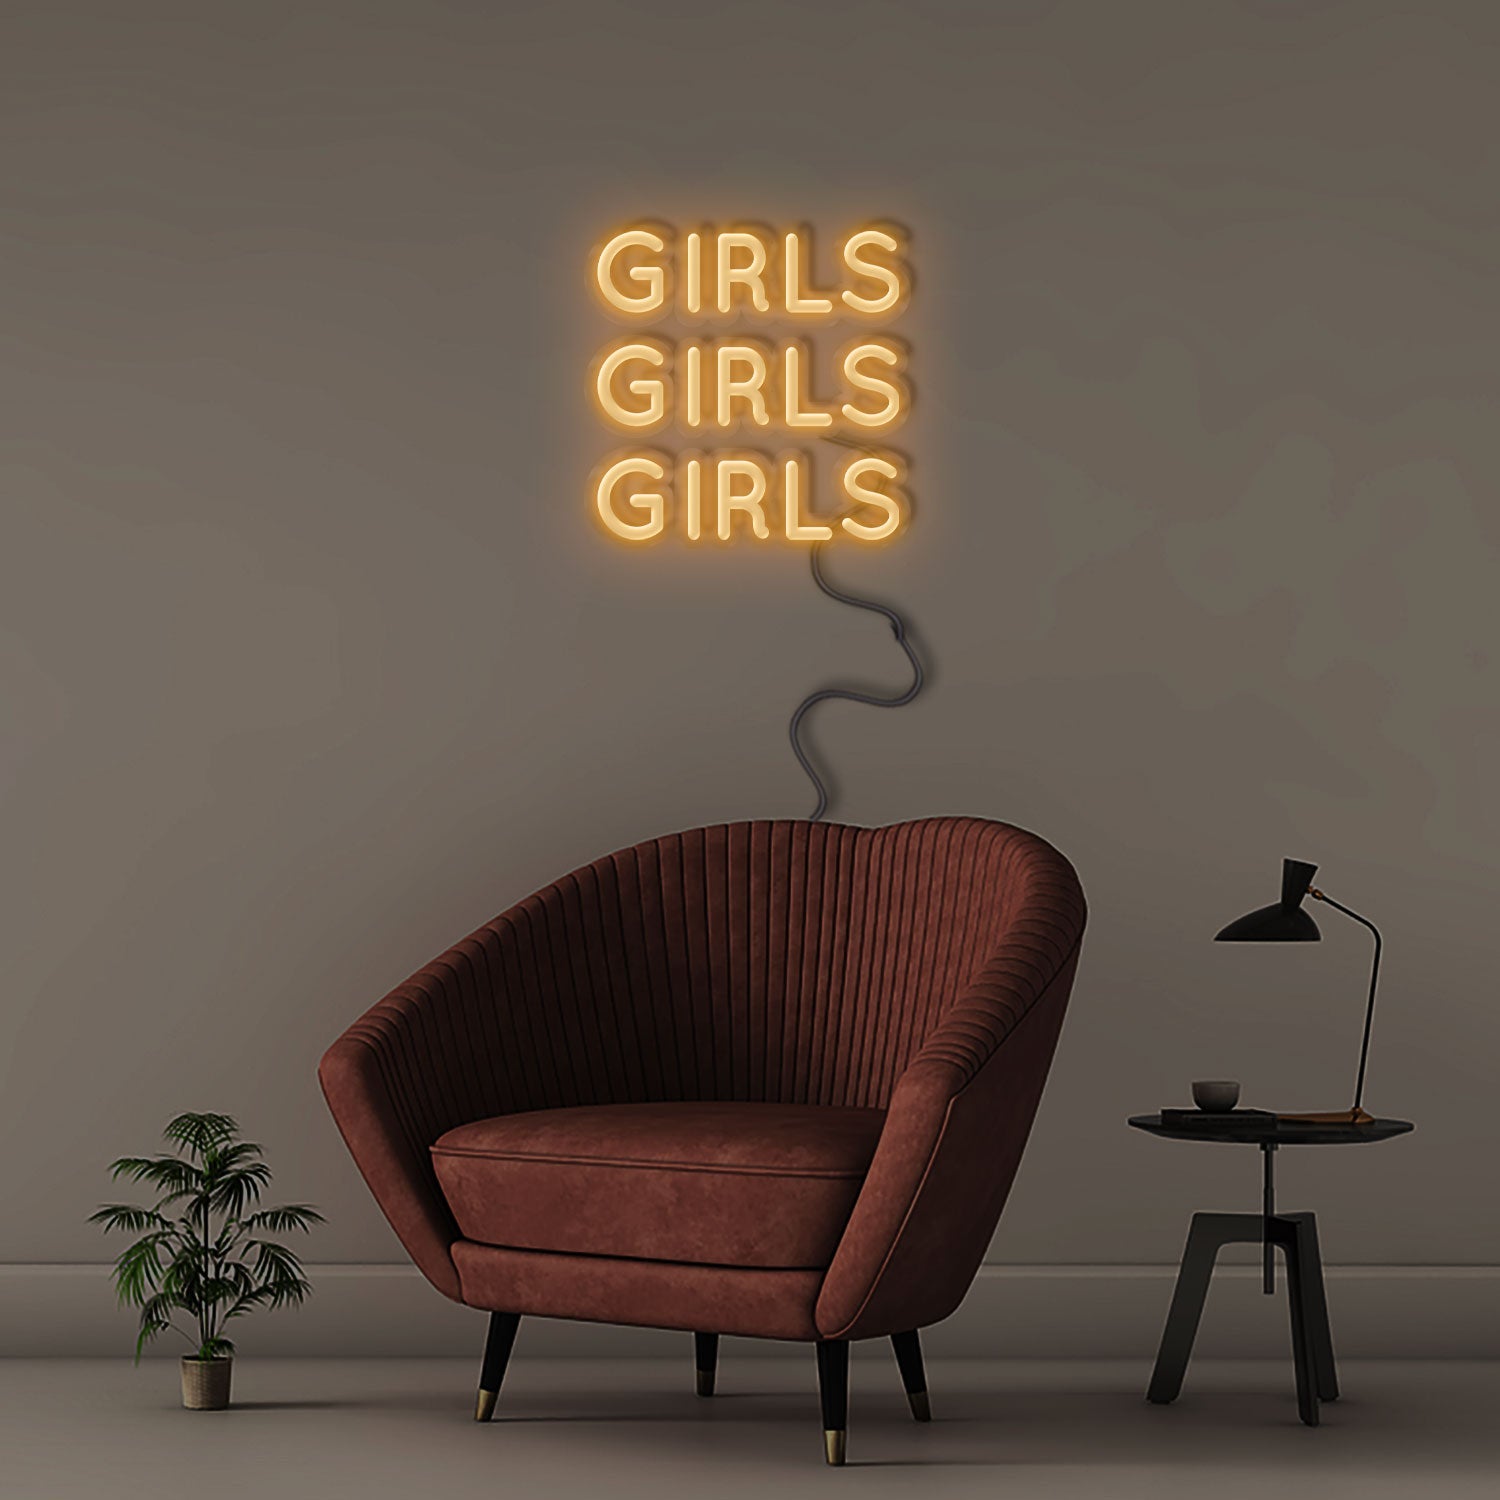 GIRLS GIRLS GIRLS - Neonific - LED Neon Signs - 60cm - White